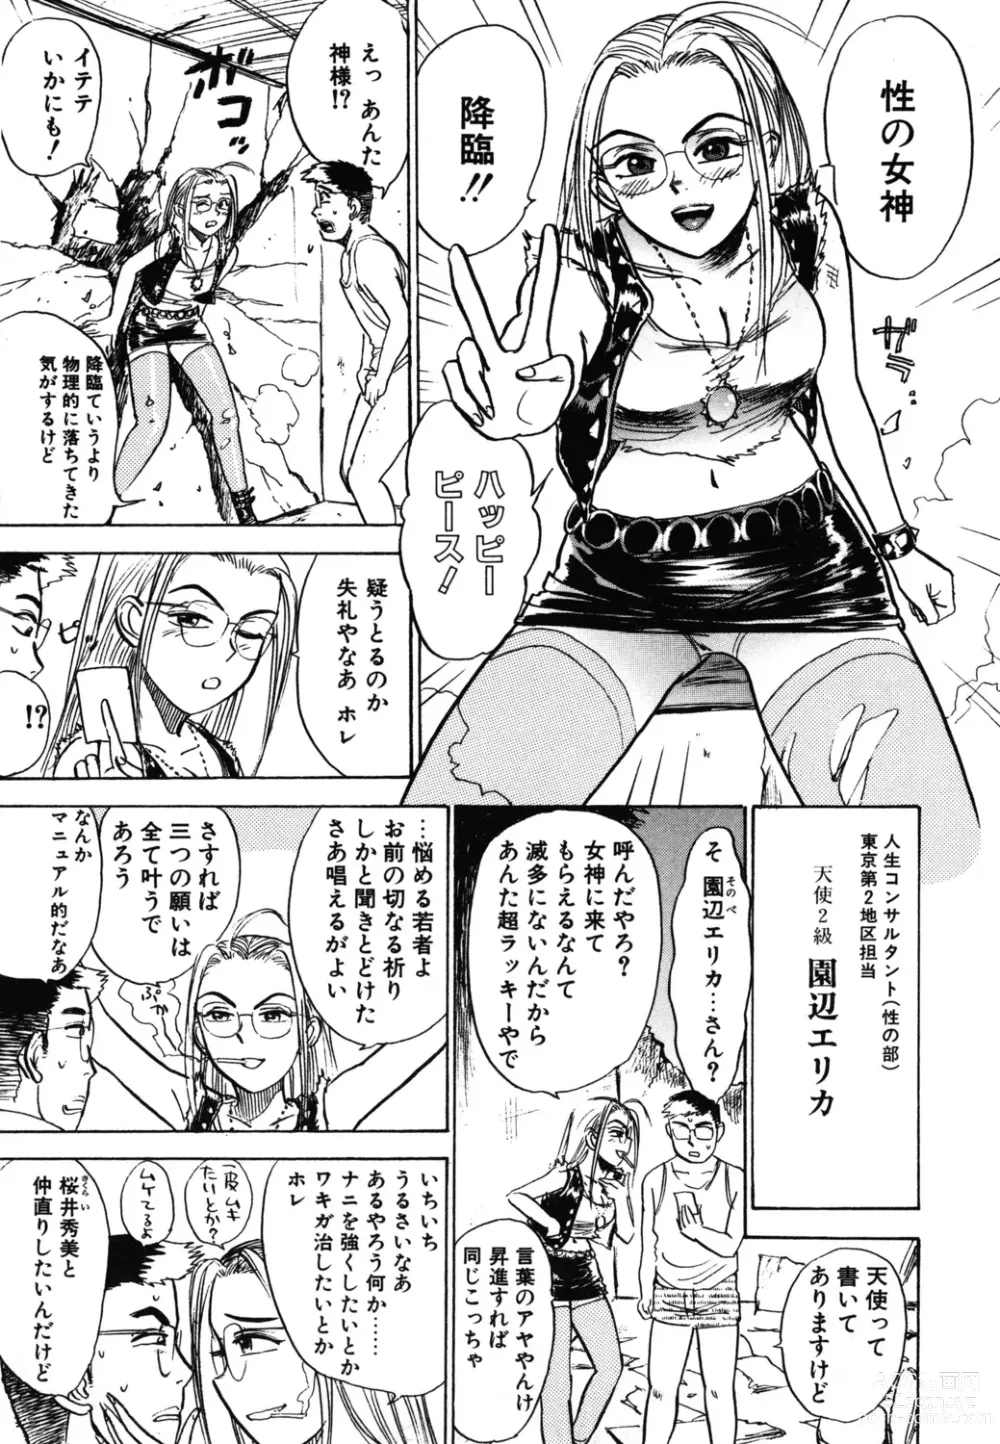 Page 169 of manga Abunai Reiko Sensei 1